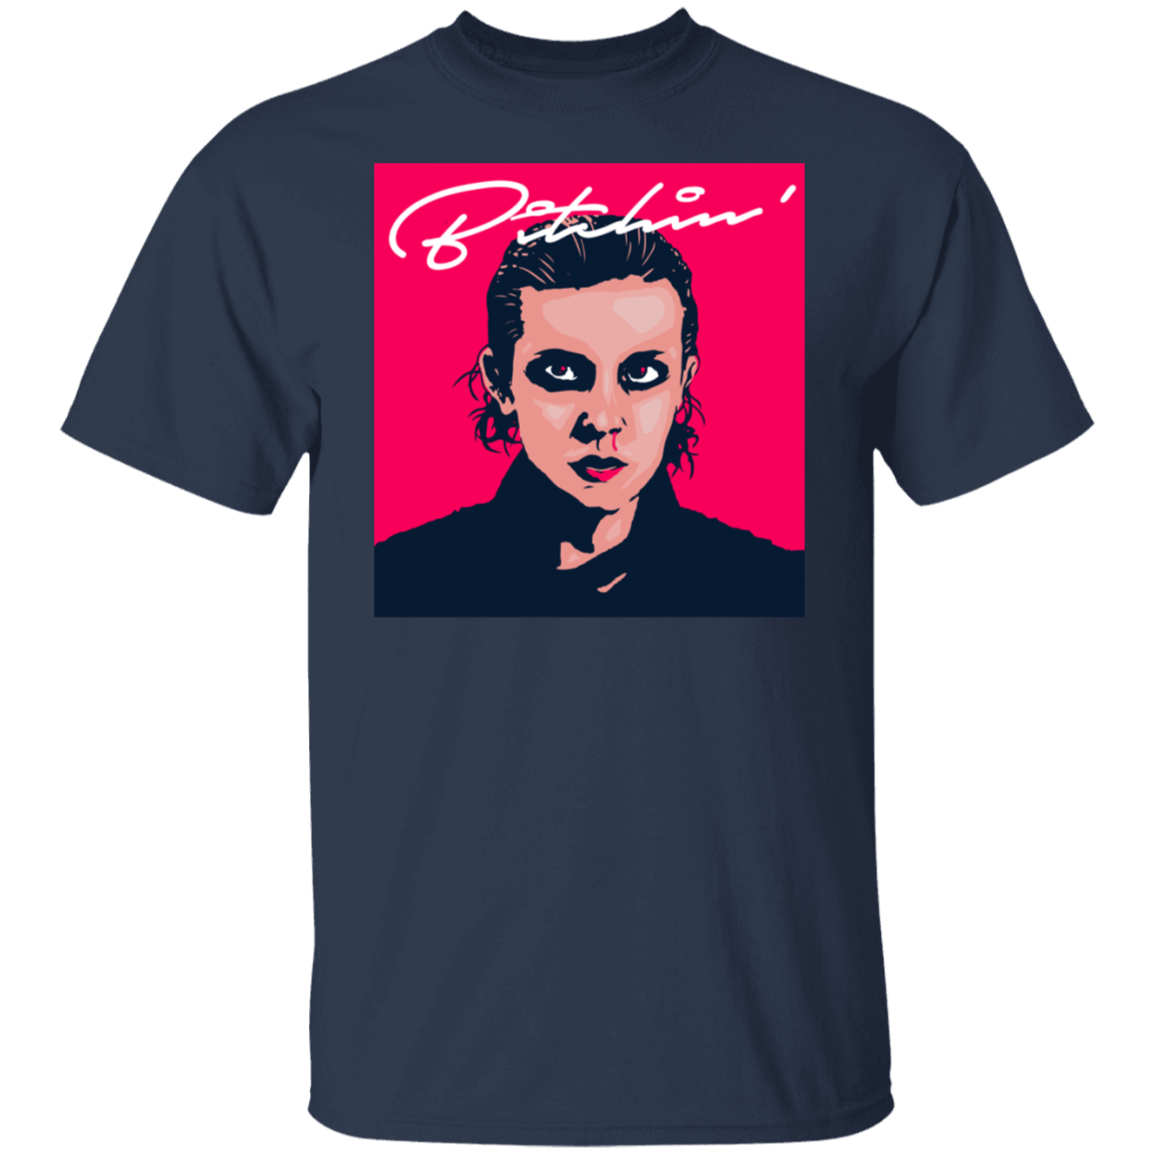 T-Shirts Navy / S Bitchin T-Shirt